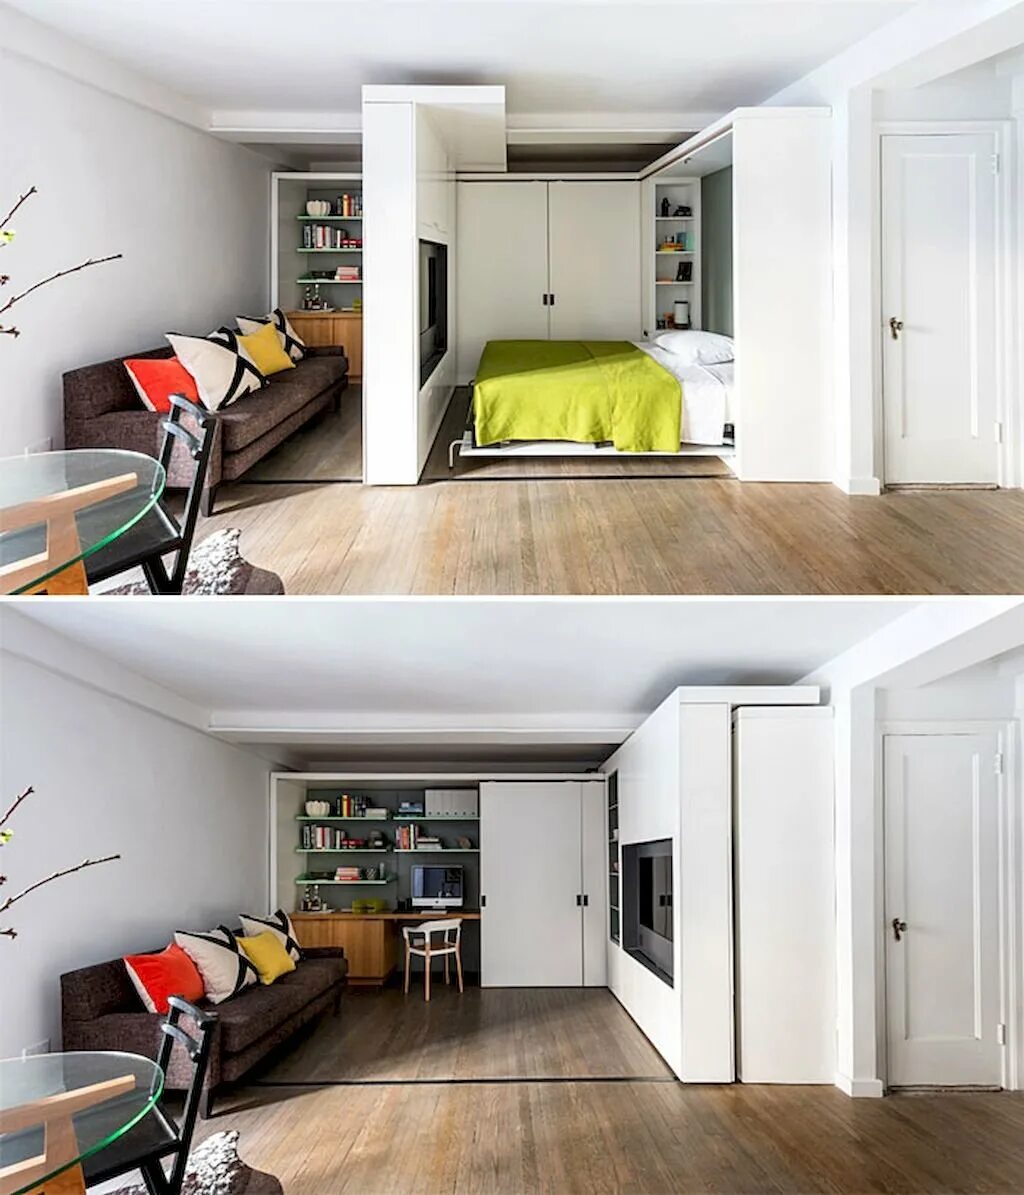 Идеи для маленькой квартиры. Интересные решения для маленькой квартиры. Функциональный интерьер. Дизайнерские решения для однокомнатной квартиры. Хочу половины квартиры